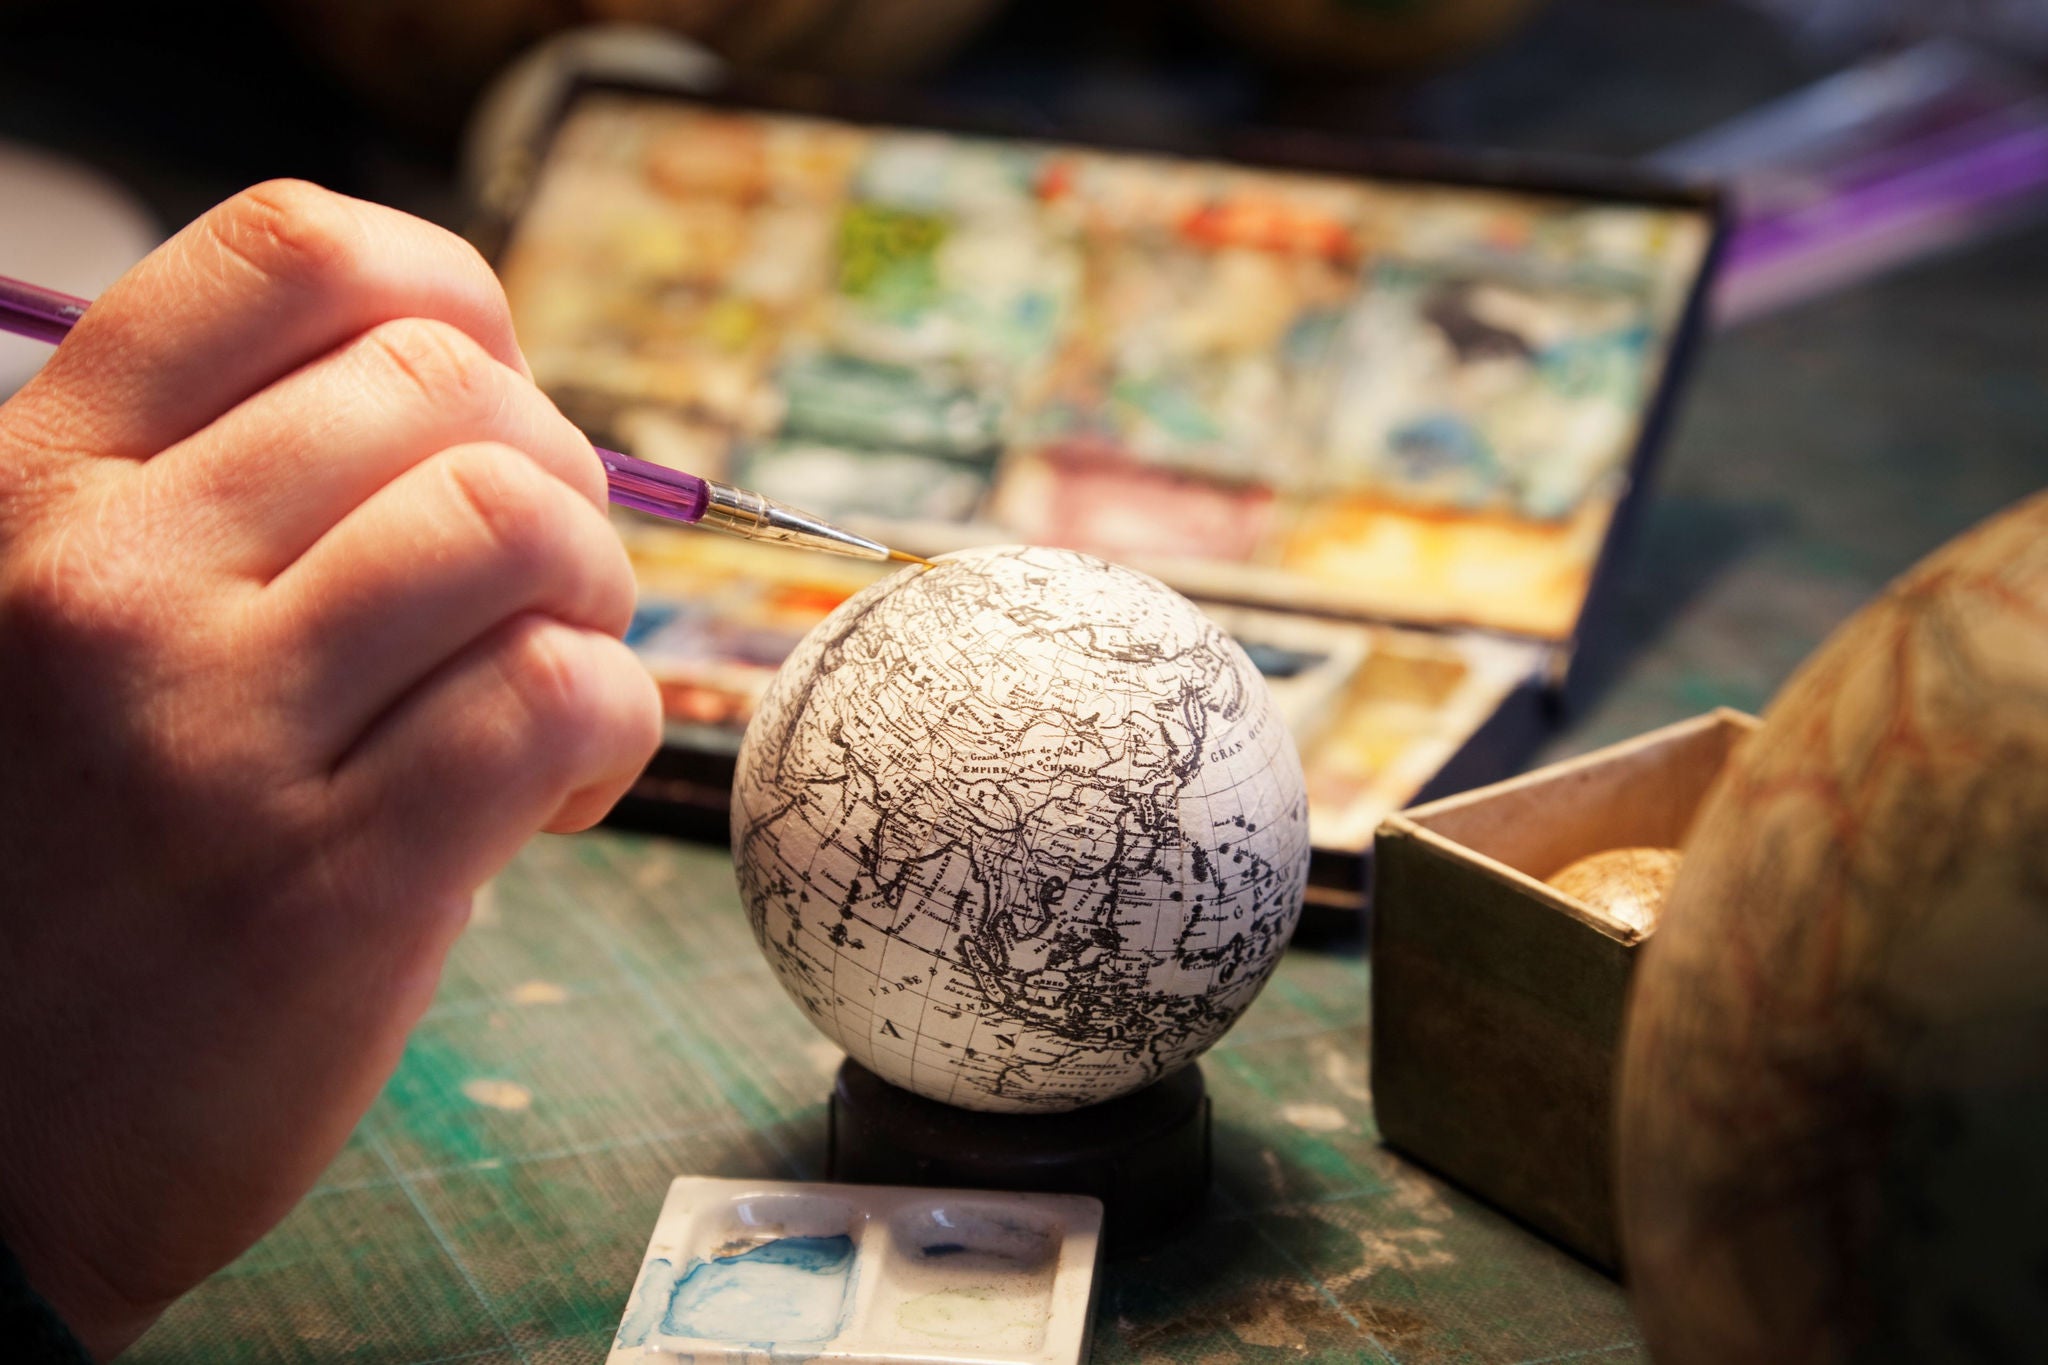 Painted globe